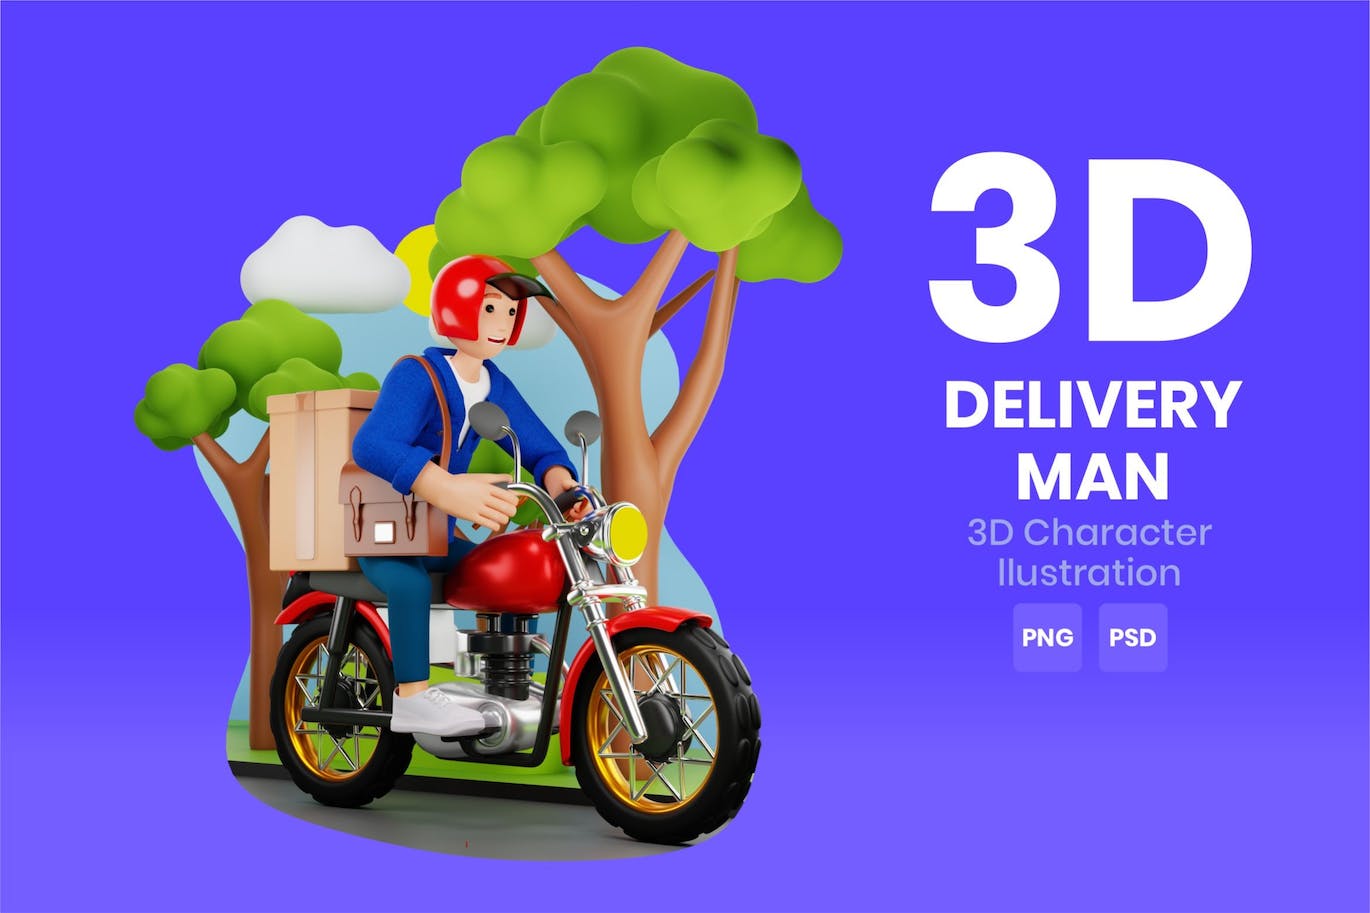 摩托车送货骑手3D角色插画素材 Delivery Man With Motorbike 3D Character 图片素材 第1张